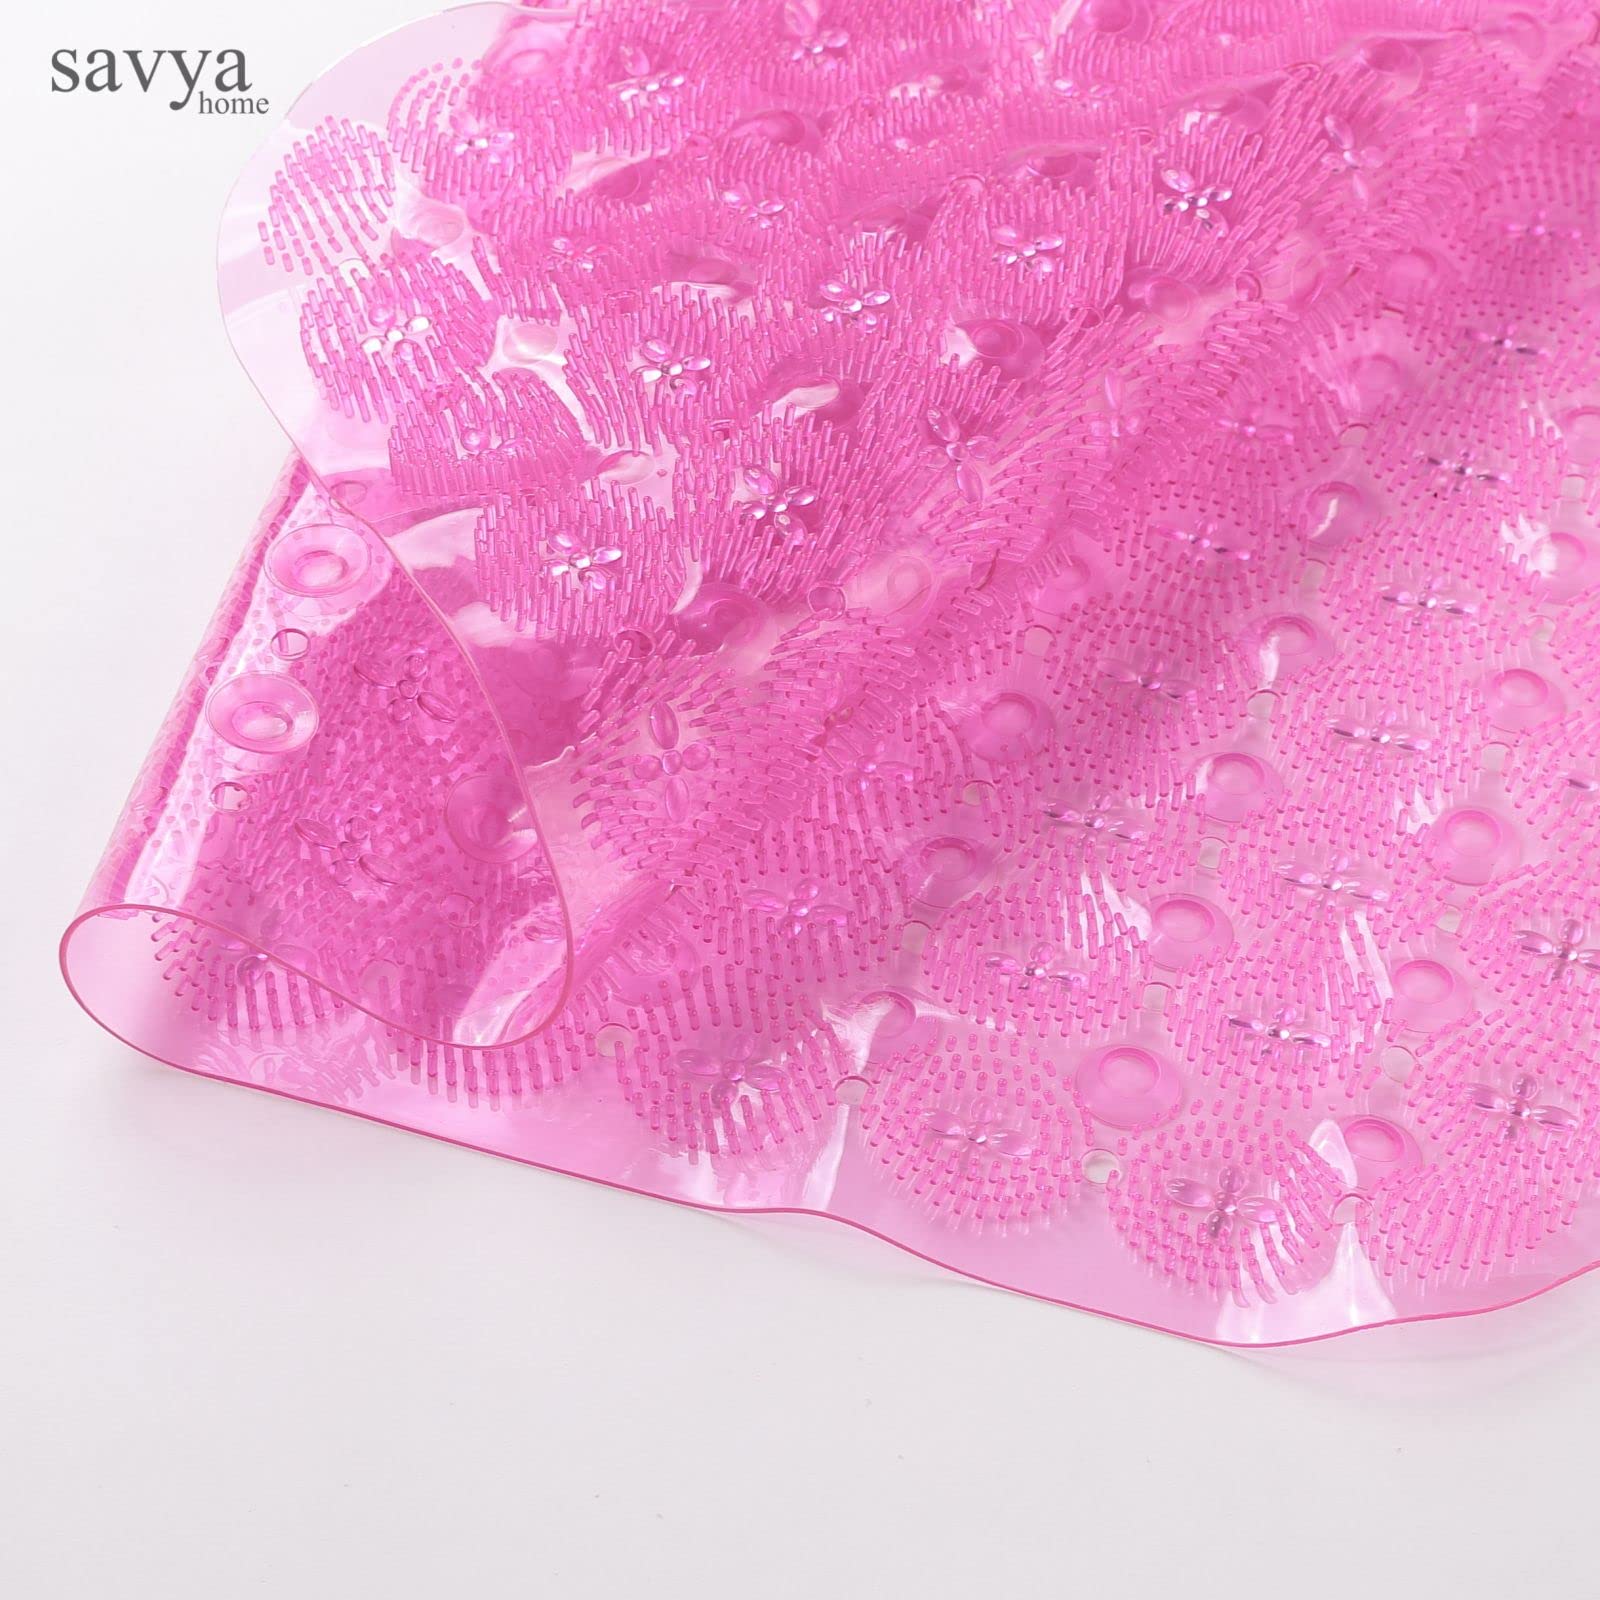 Savya Home Anti Skid Bath Mat for Bathroom, PVC Bath Mat with Suction Cup, Machine Washable Floor Mat (67x37 cm) (Light Pink)